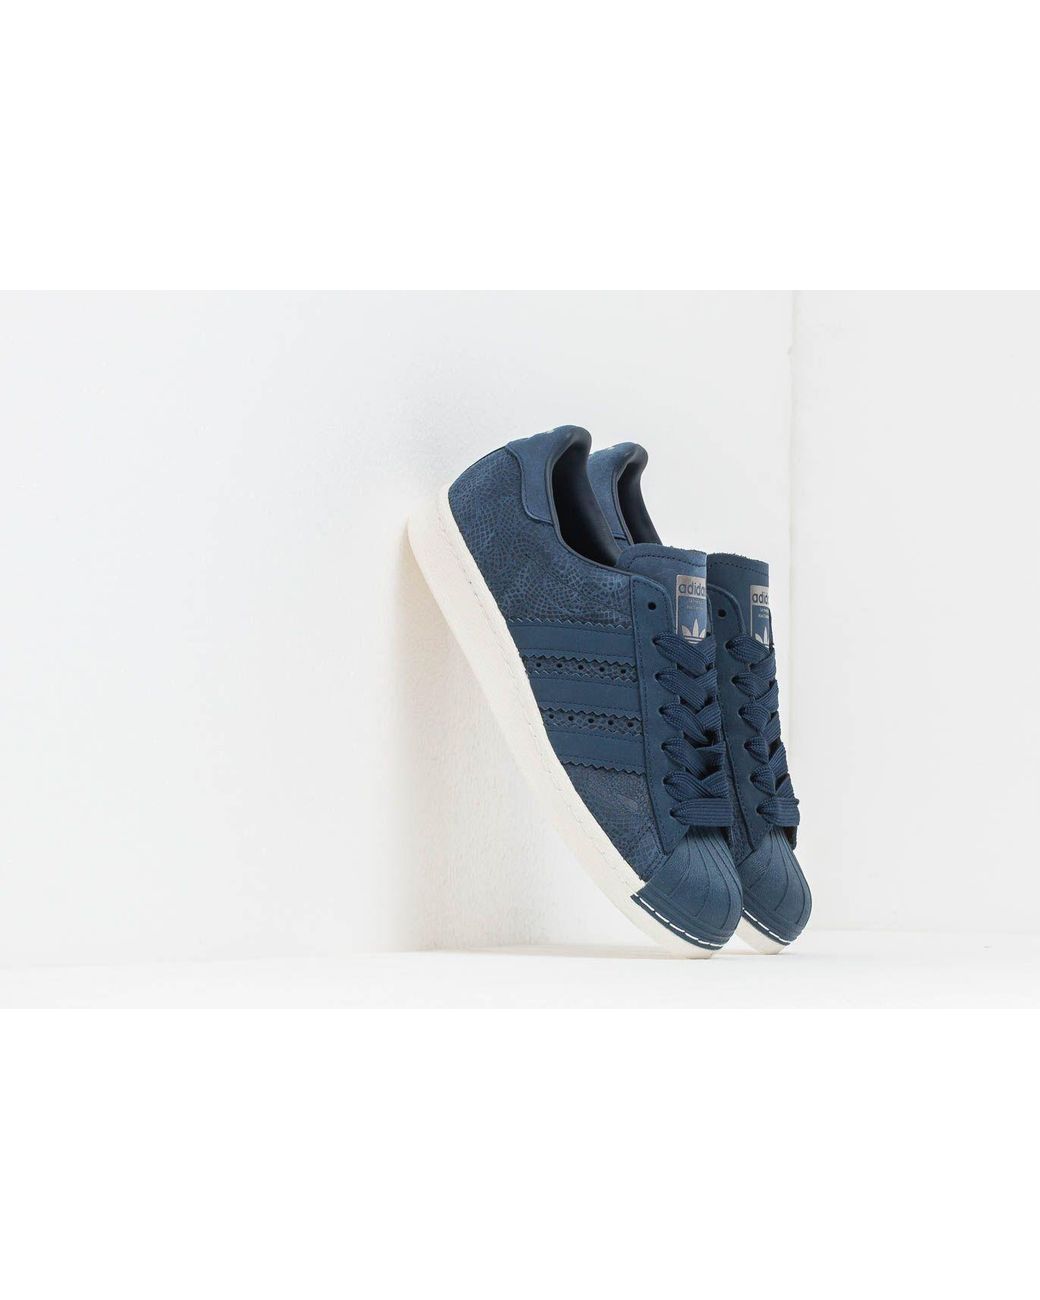 adidas Originals Adidas Superstar 80s W Conavy/ Conavy/ Off White in Blue |  Lyst